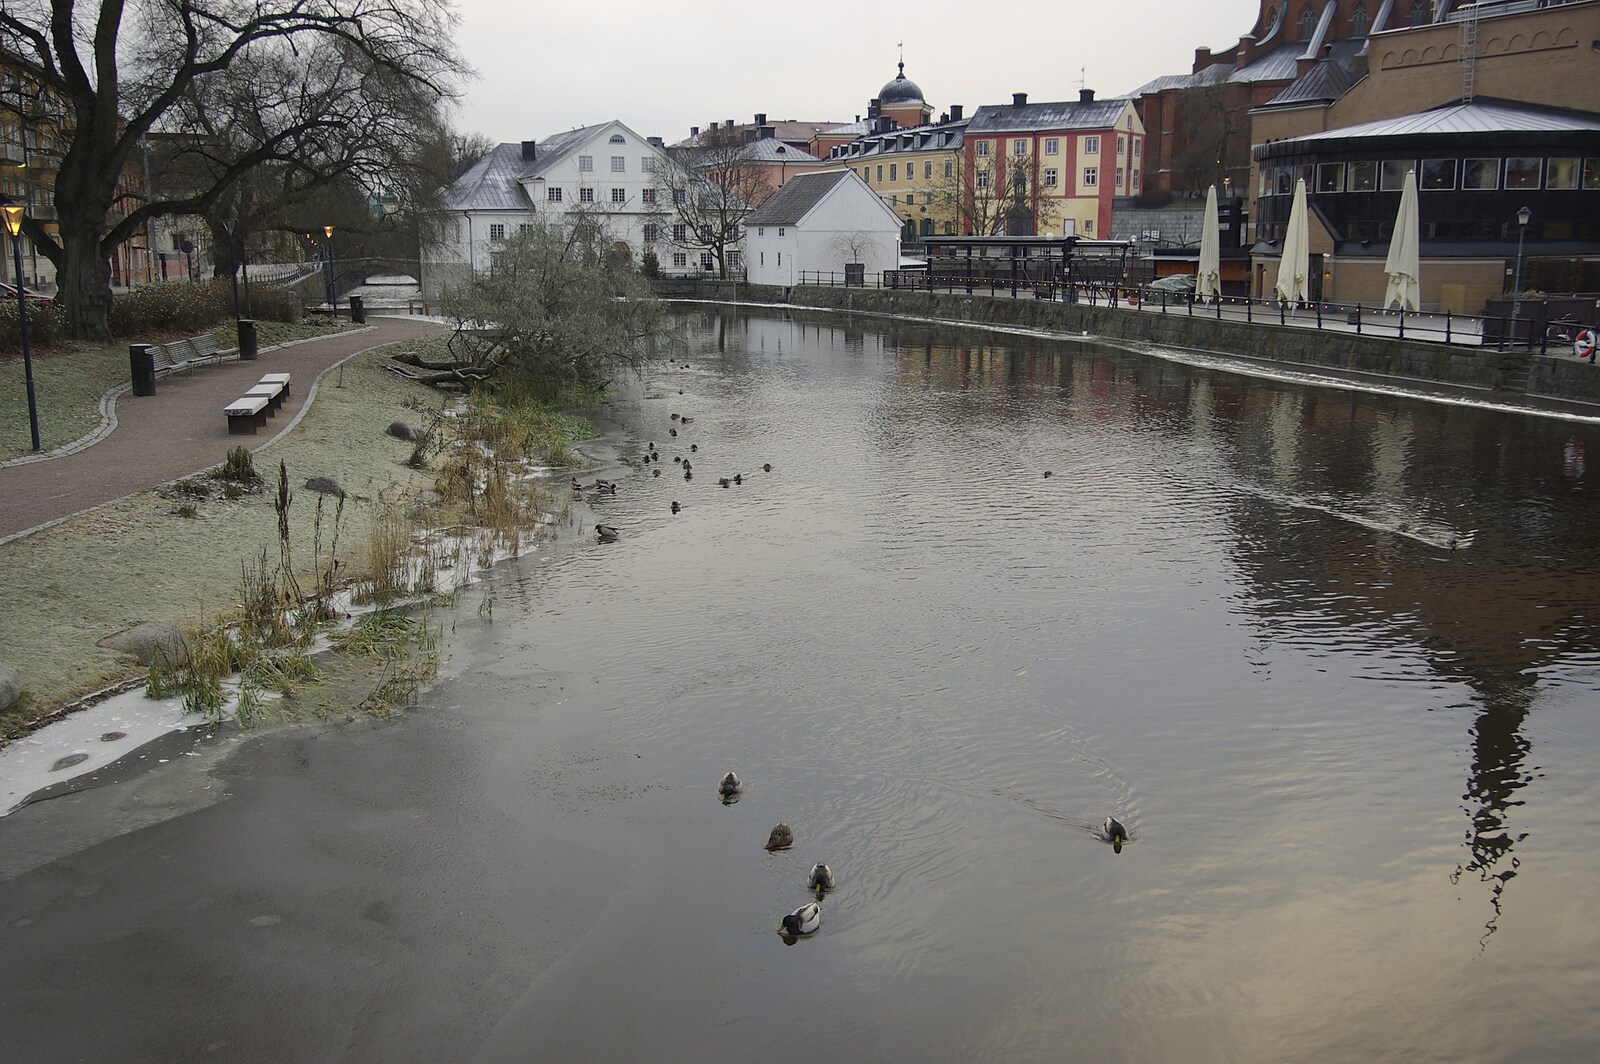 Ducks on Uppsala's river from Gamla Uppsala, Uppsala County, Sweden - 16th December 2007